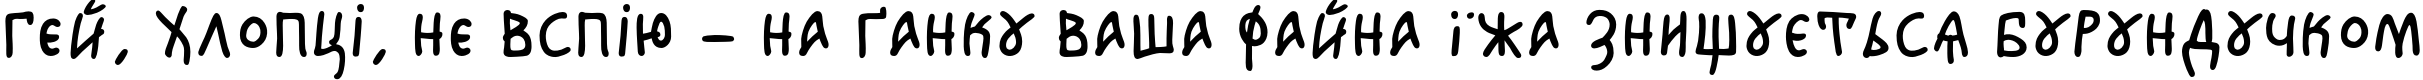 Пример написания шрифтом Agafia текста на украинском